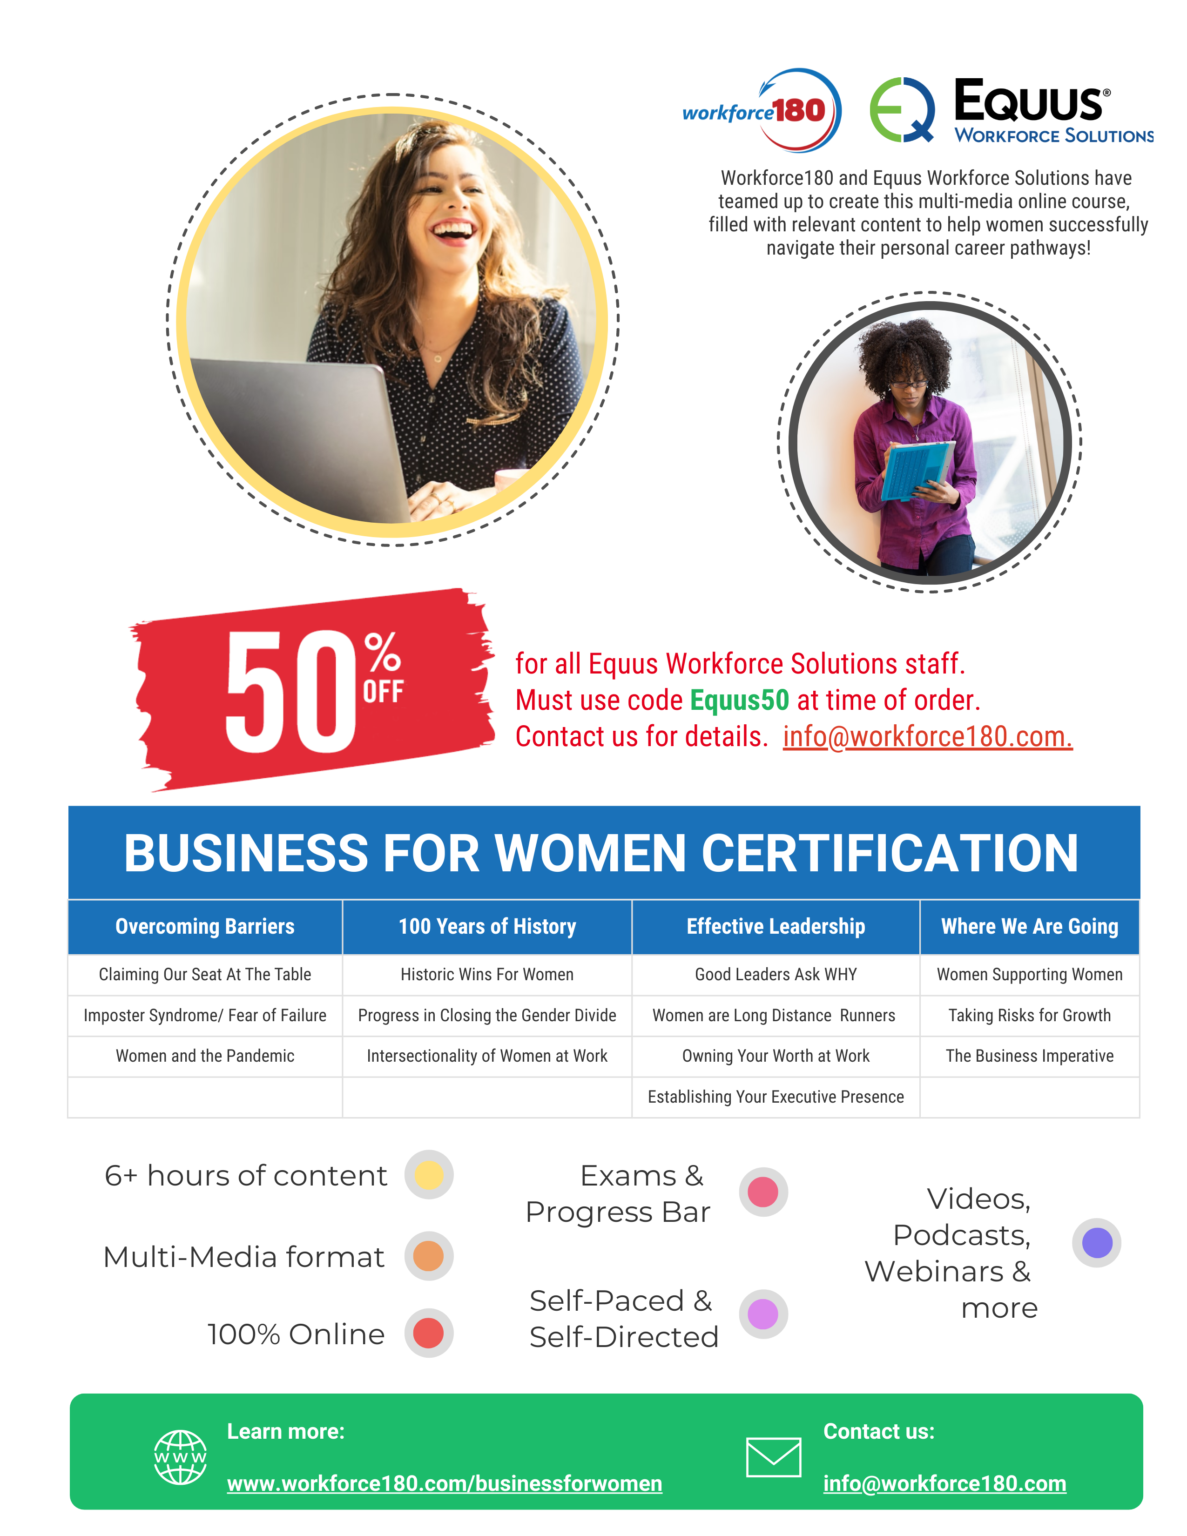 EQUUS Business for Women Workforce180